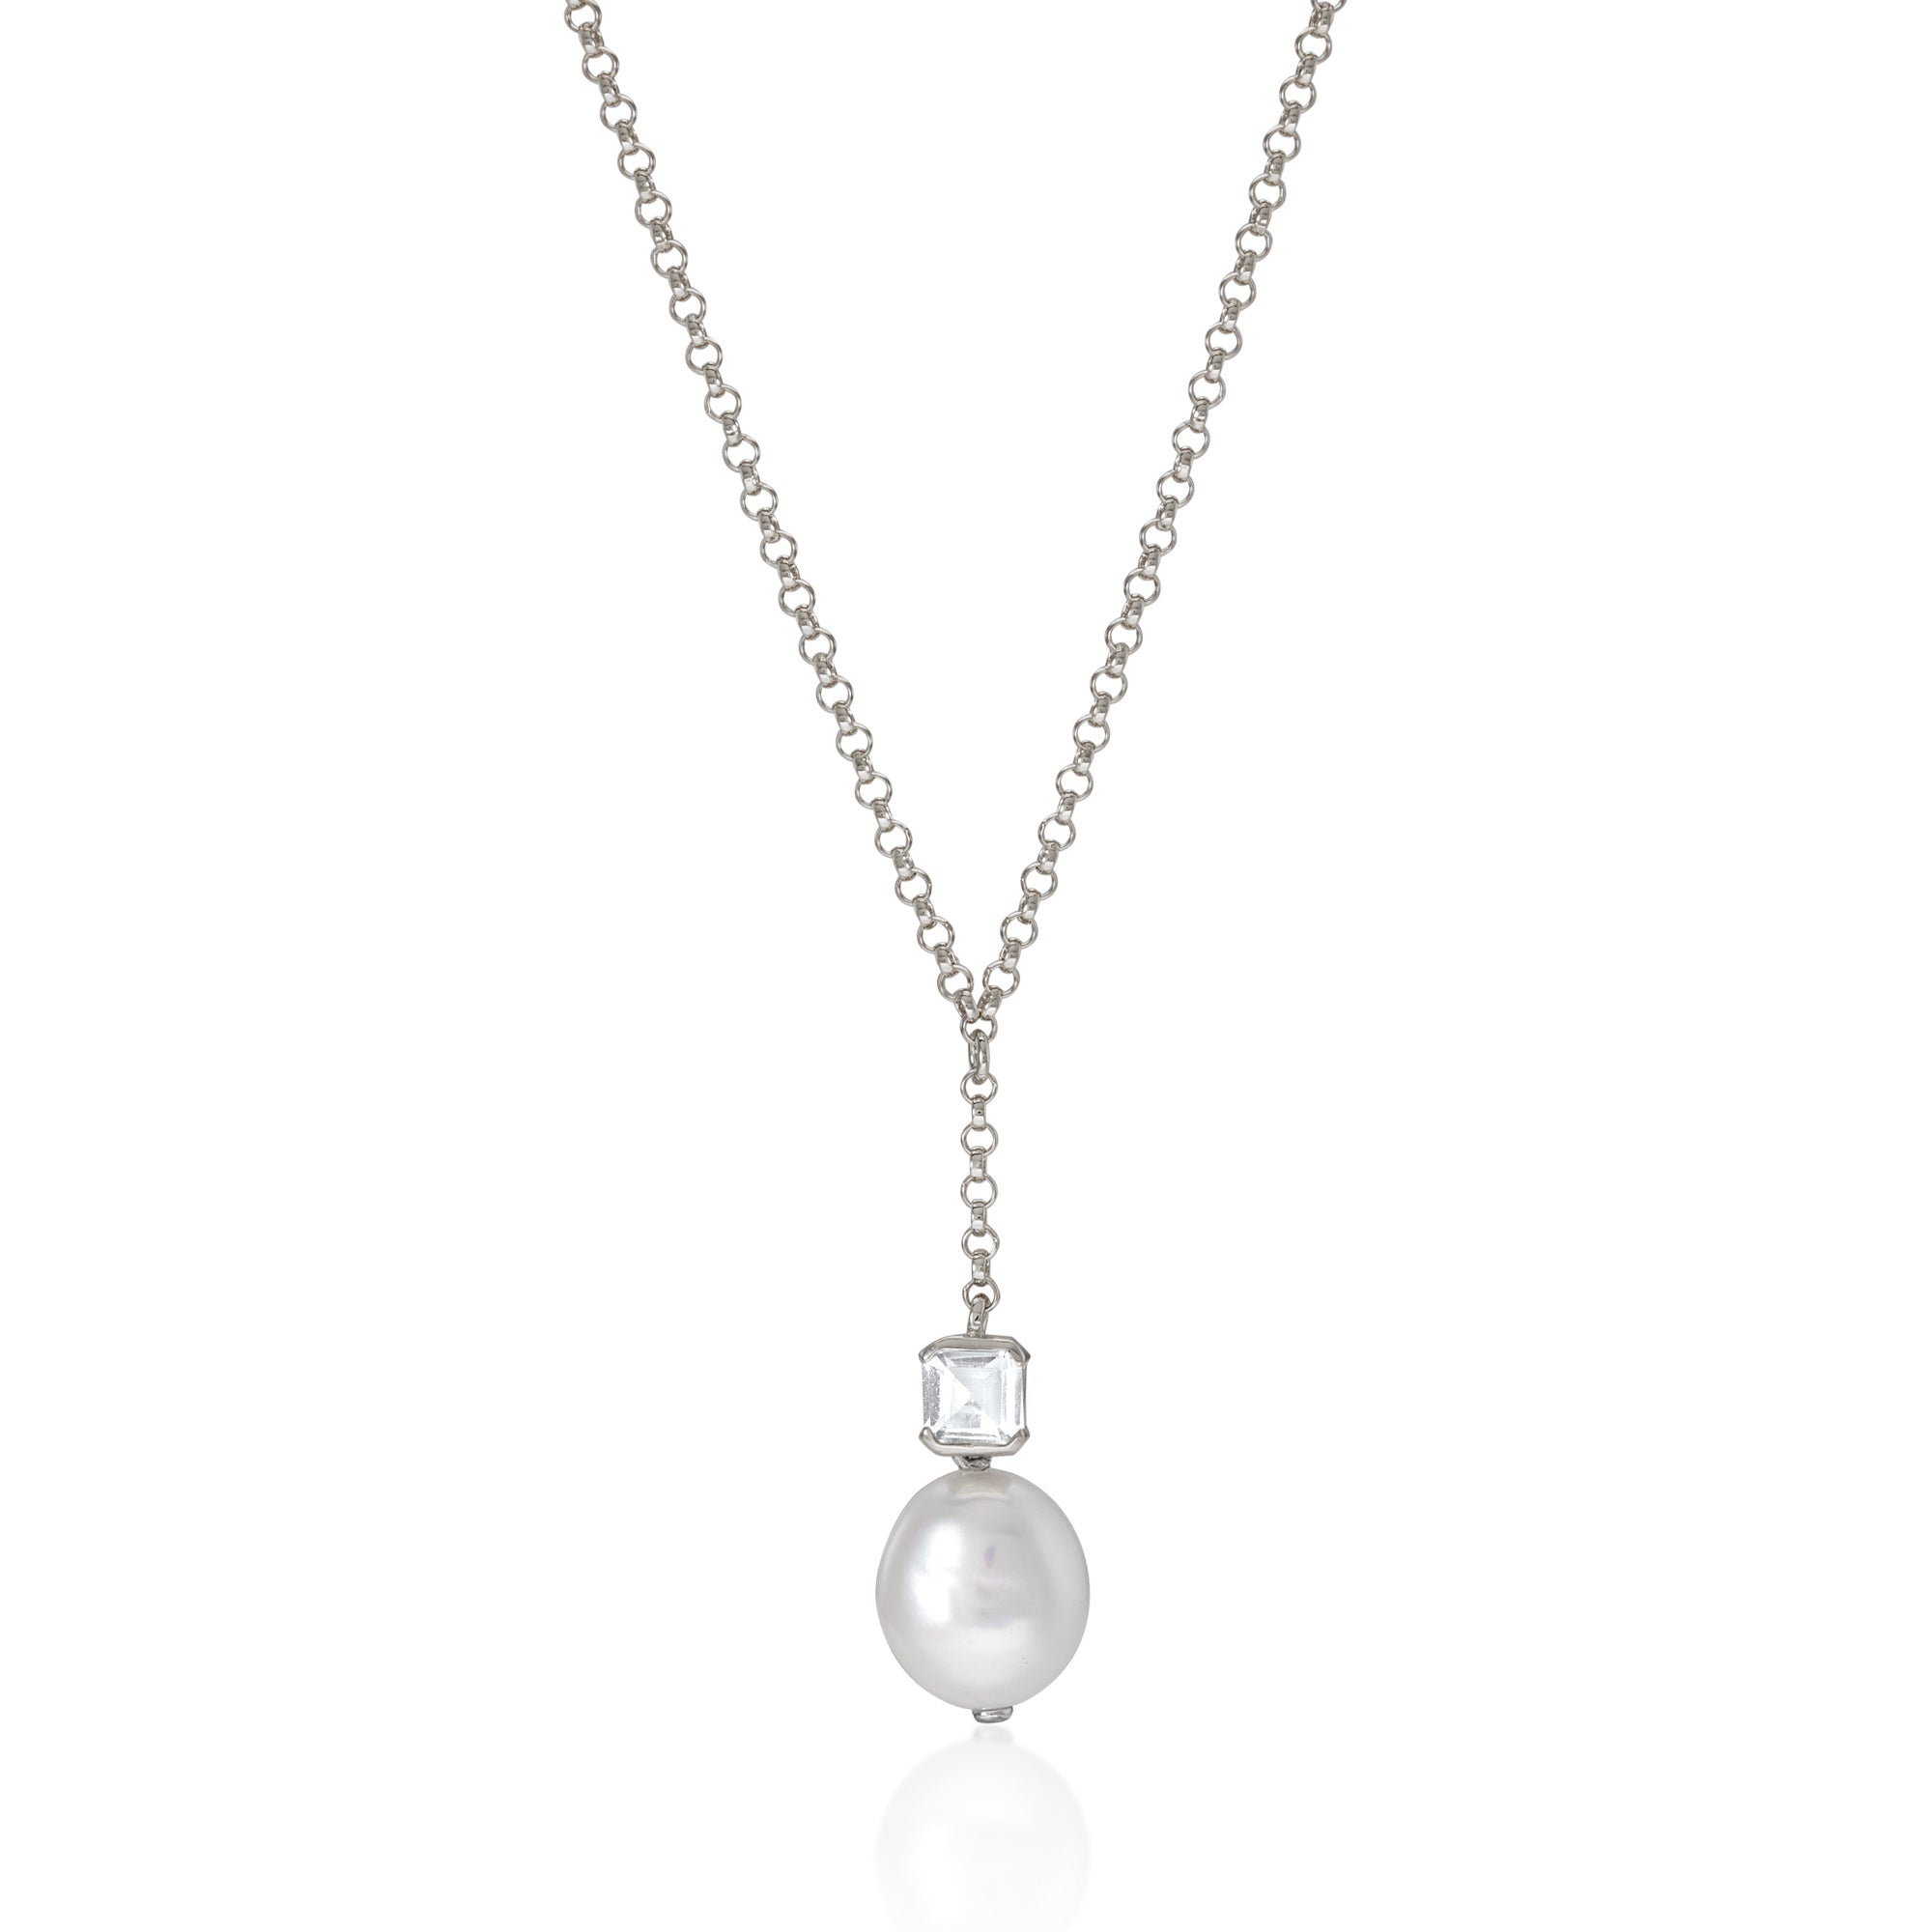 Bella Baroque Pearl Necklace in Silver and White Topaz